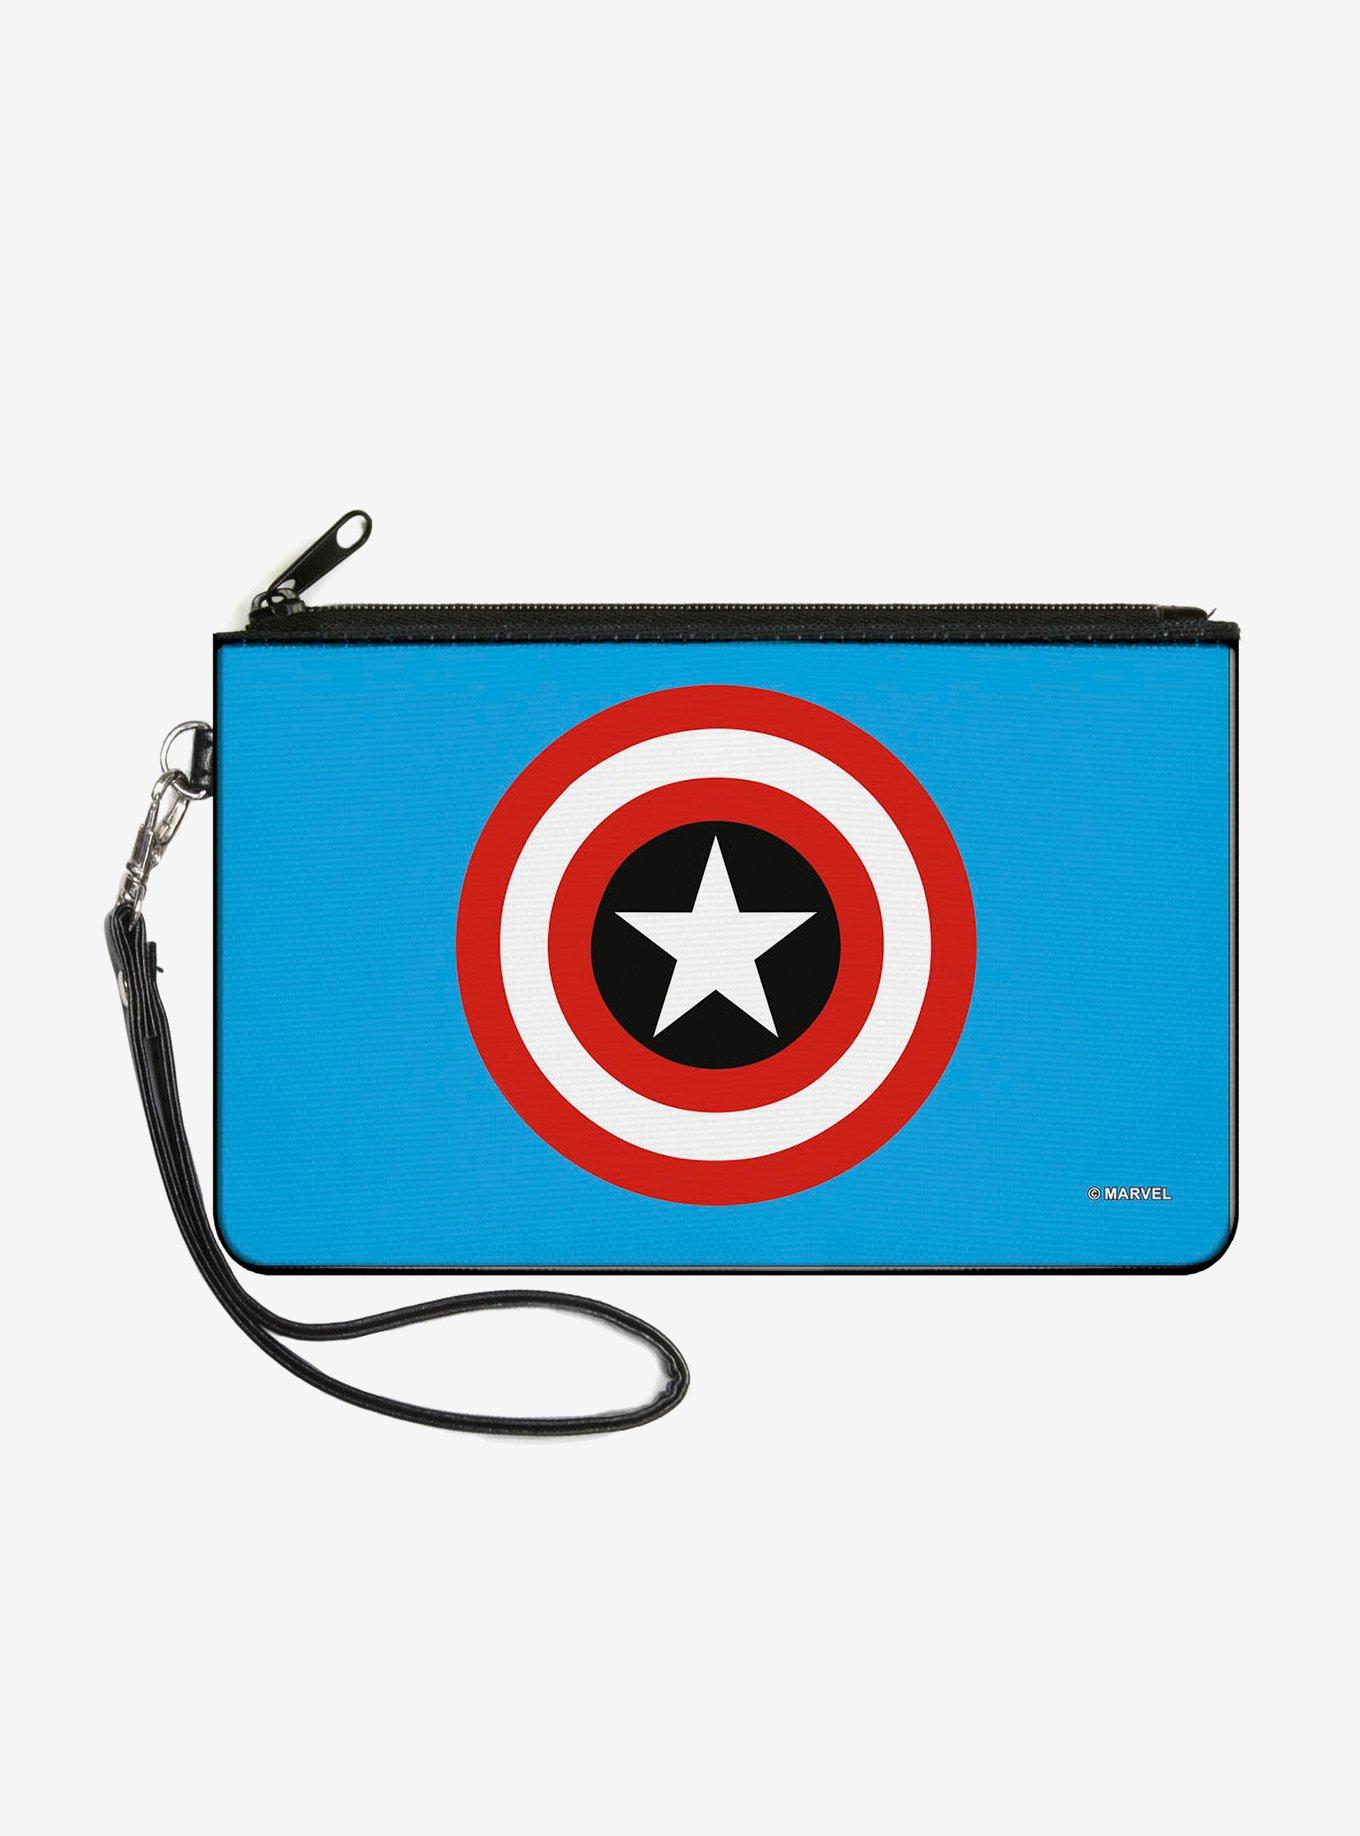 Marvel Captain America Shield Wallet Canvas Zip Clutch